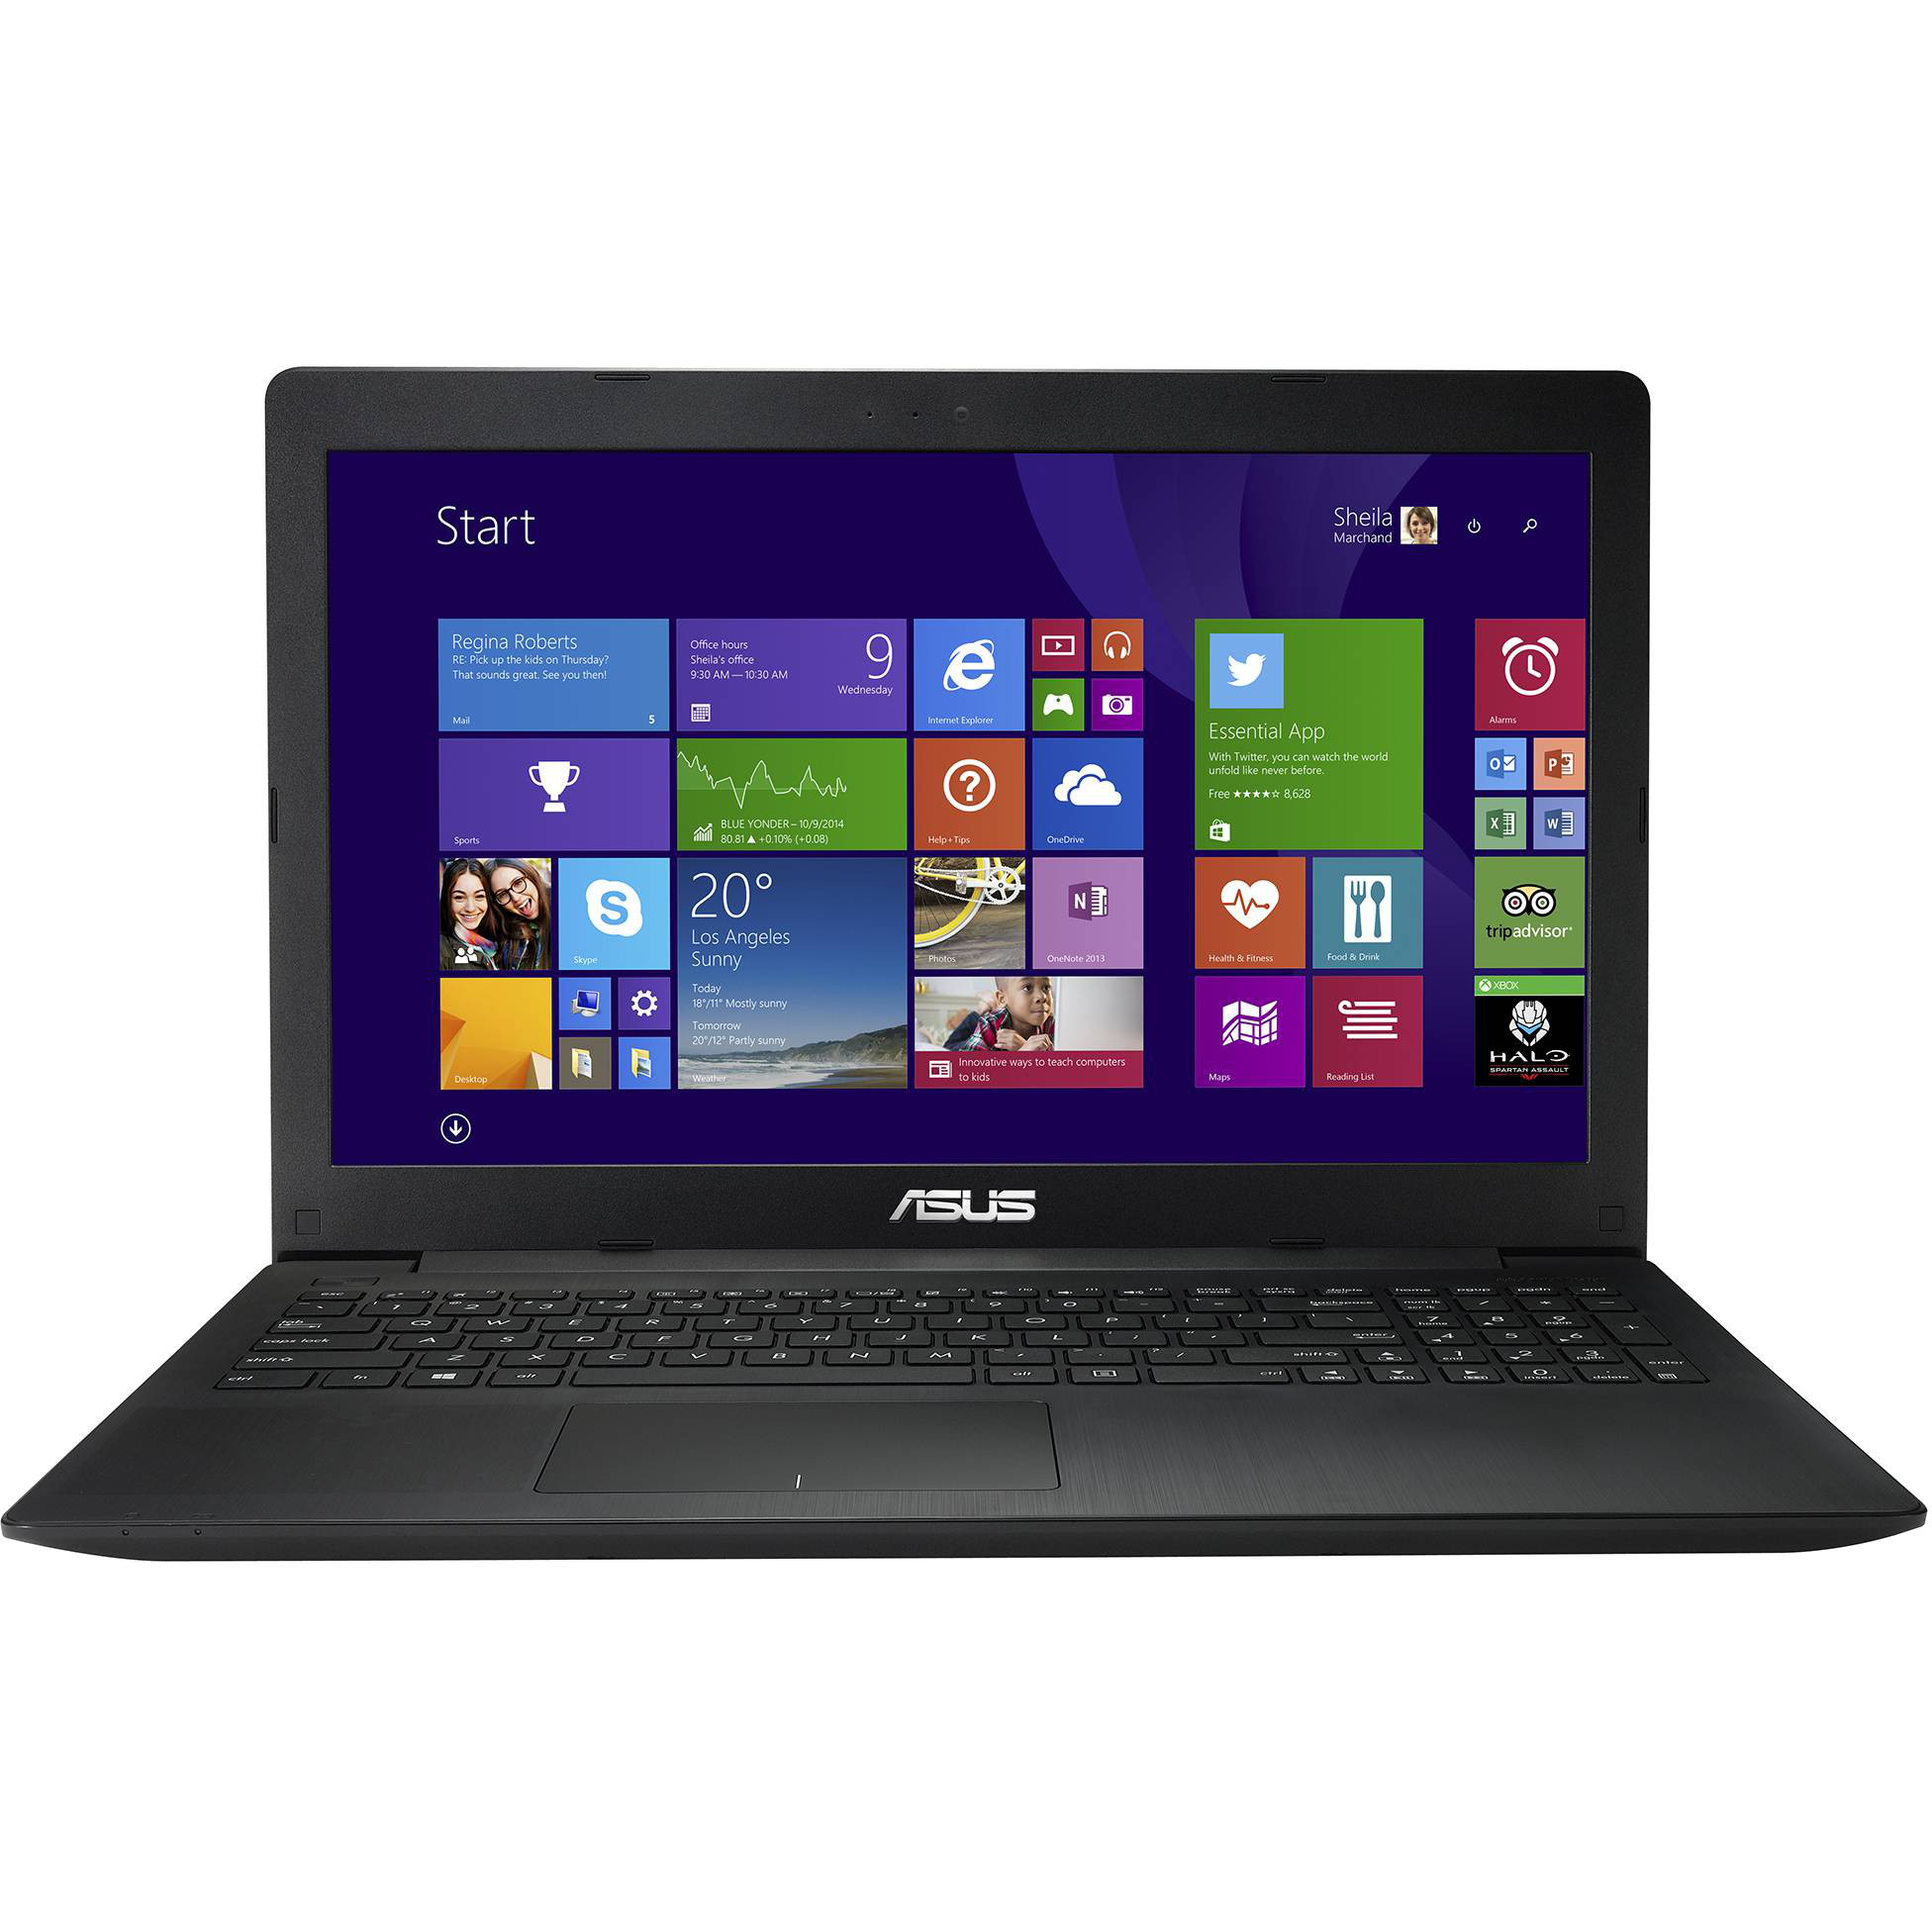  Laptop Asus X553MA-SX455B, Intel Celeron N2840, 4GB DDR3, 500GB, Intel HD Graphics, Windows 8.1 